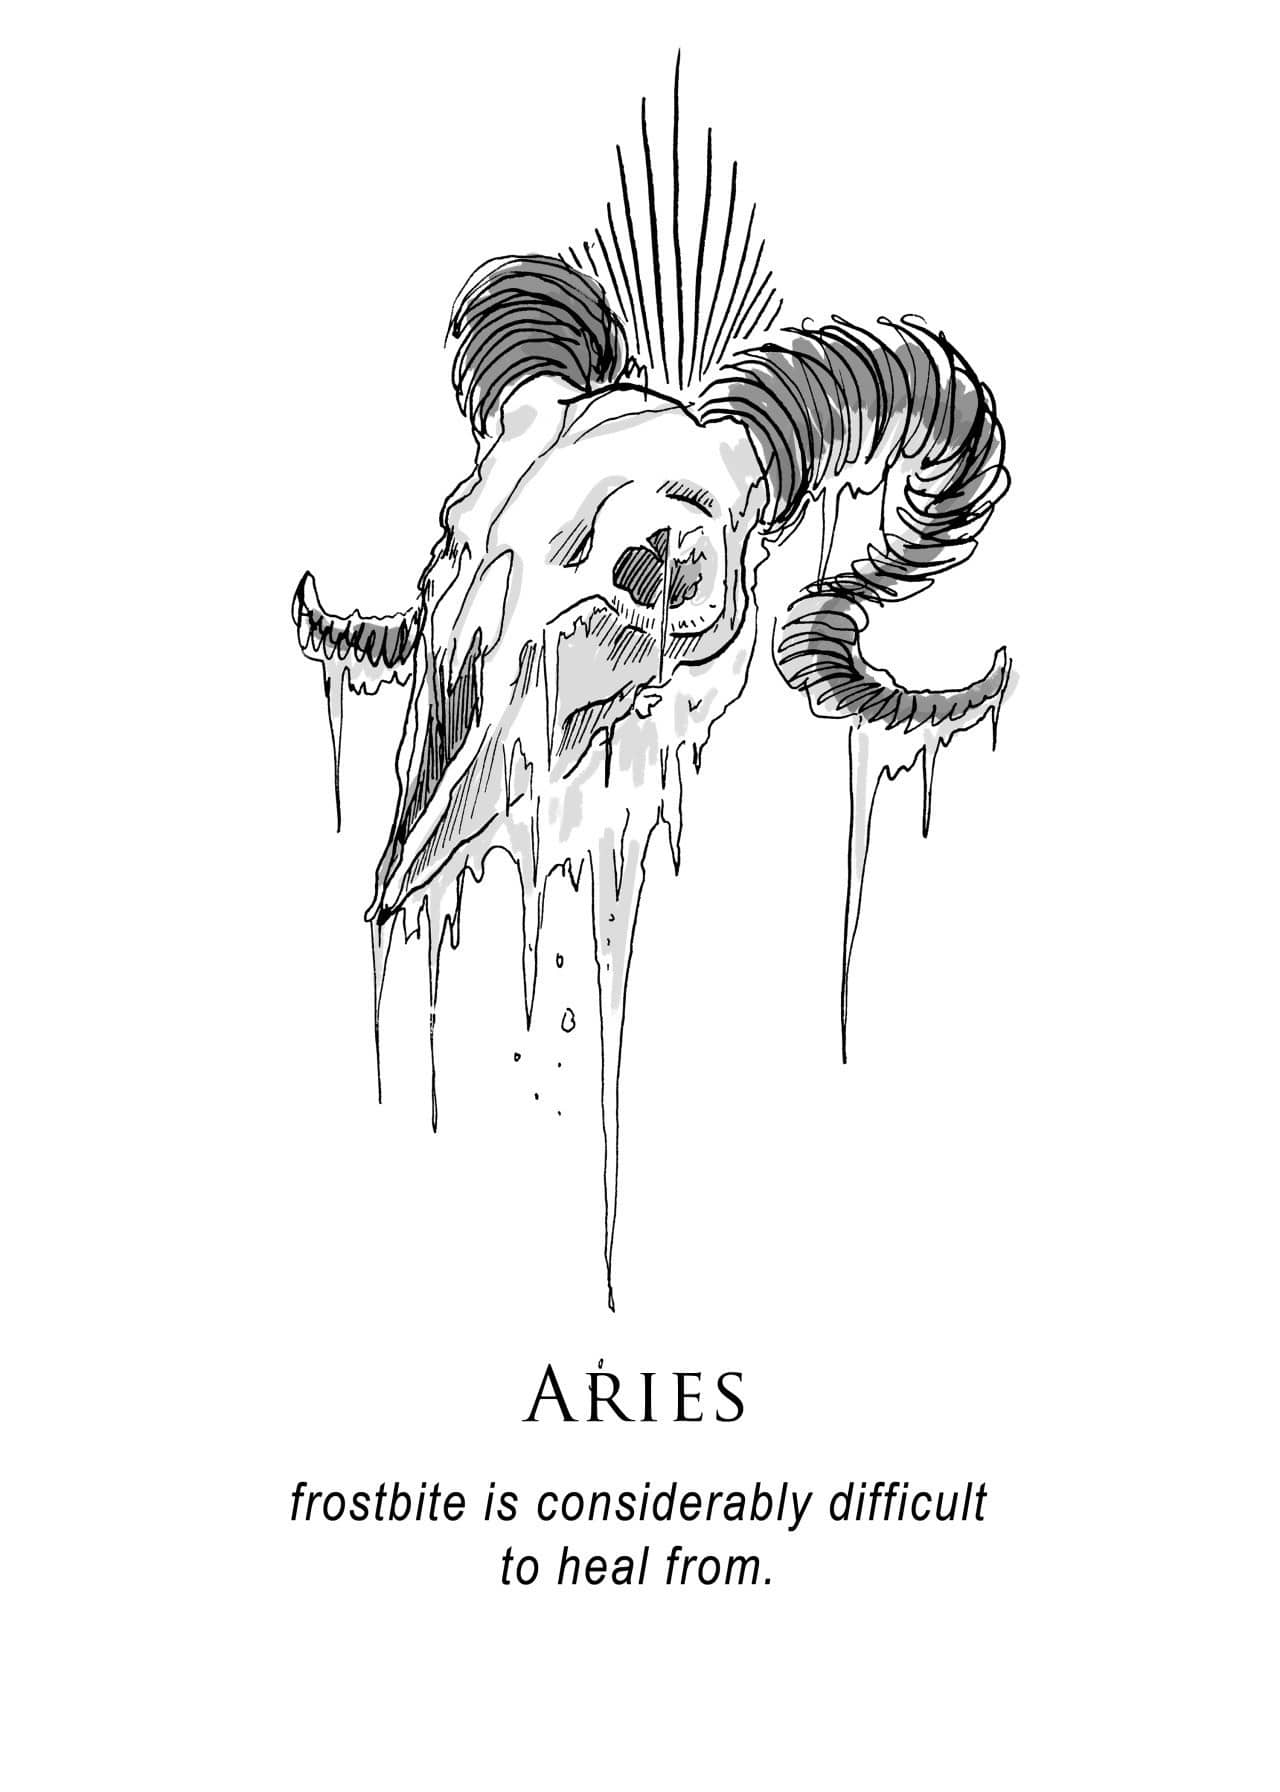 horoscope-illustration-amrit-brar-10